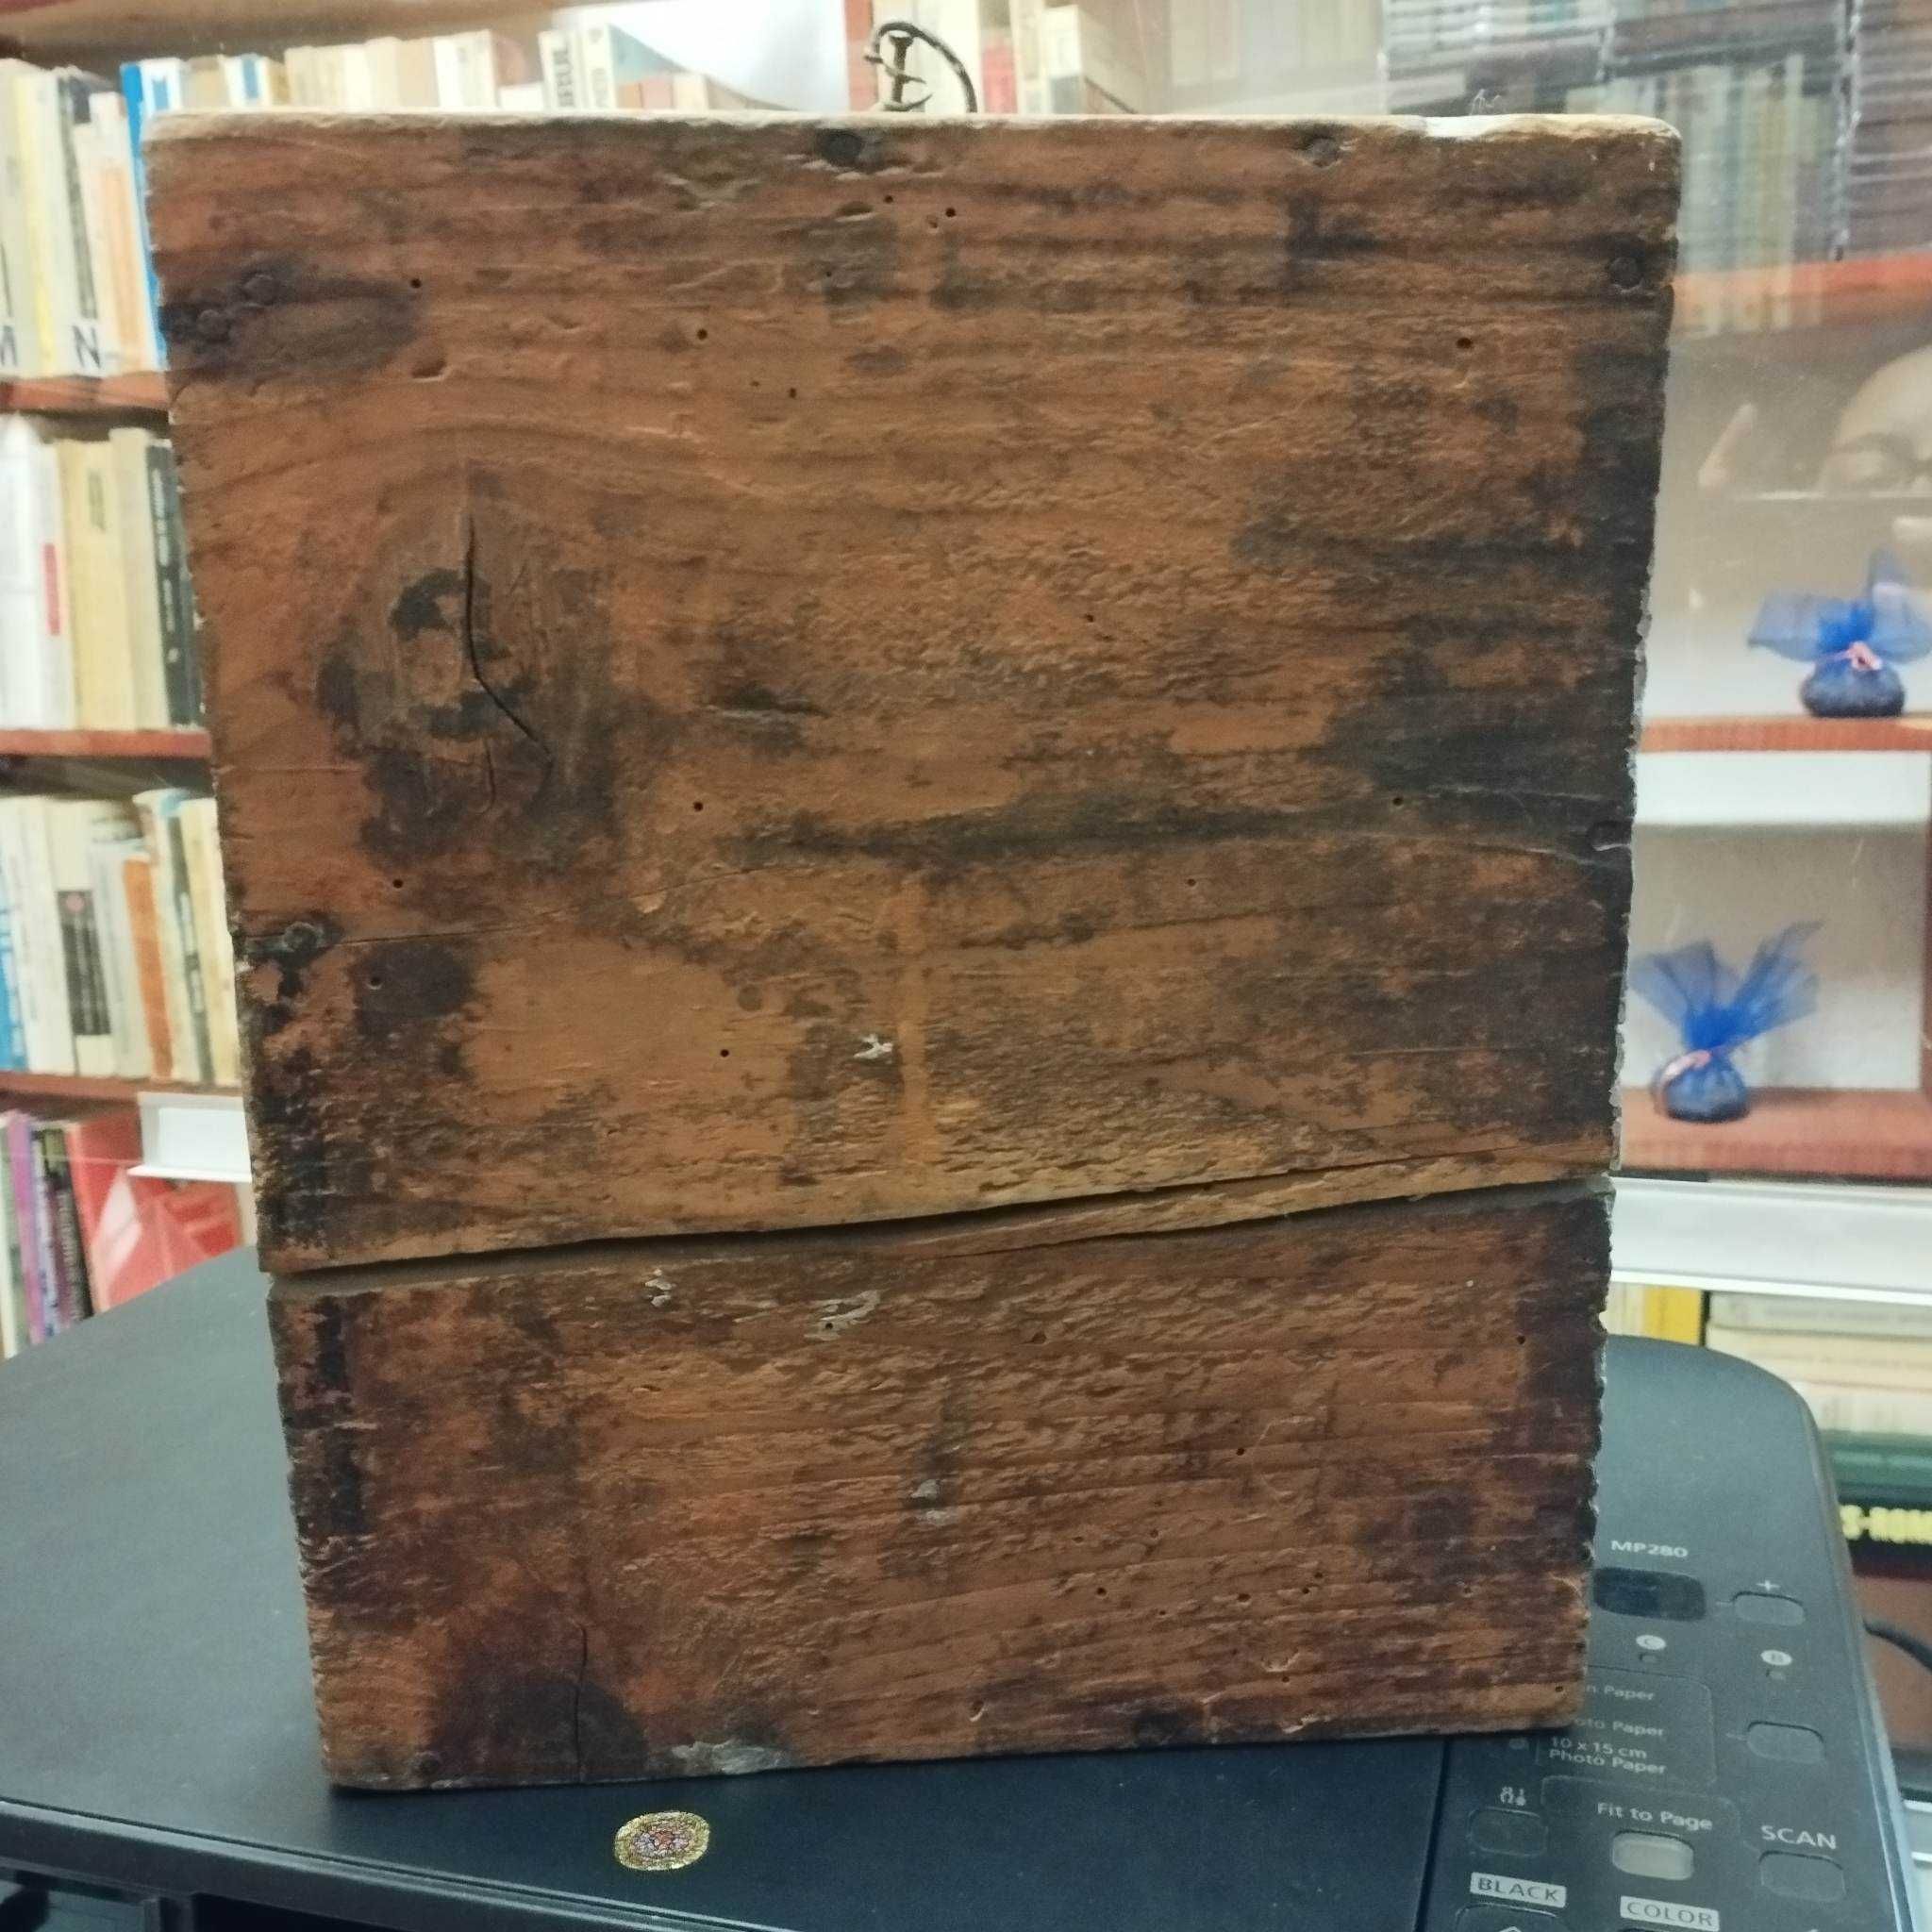 Icoana veche, litografie, in cutie de lemn